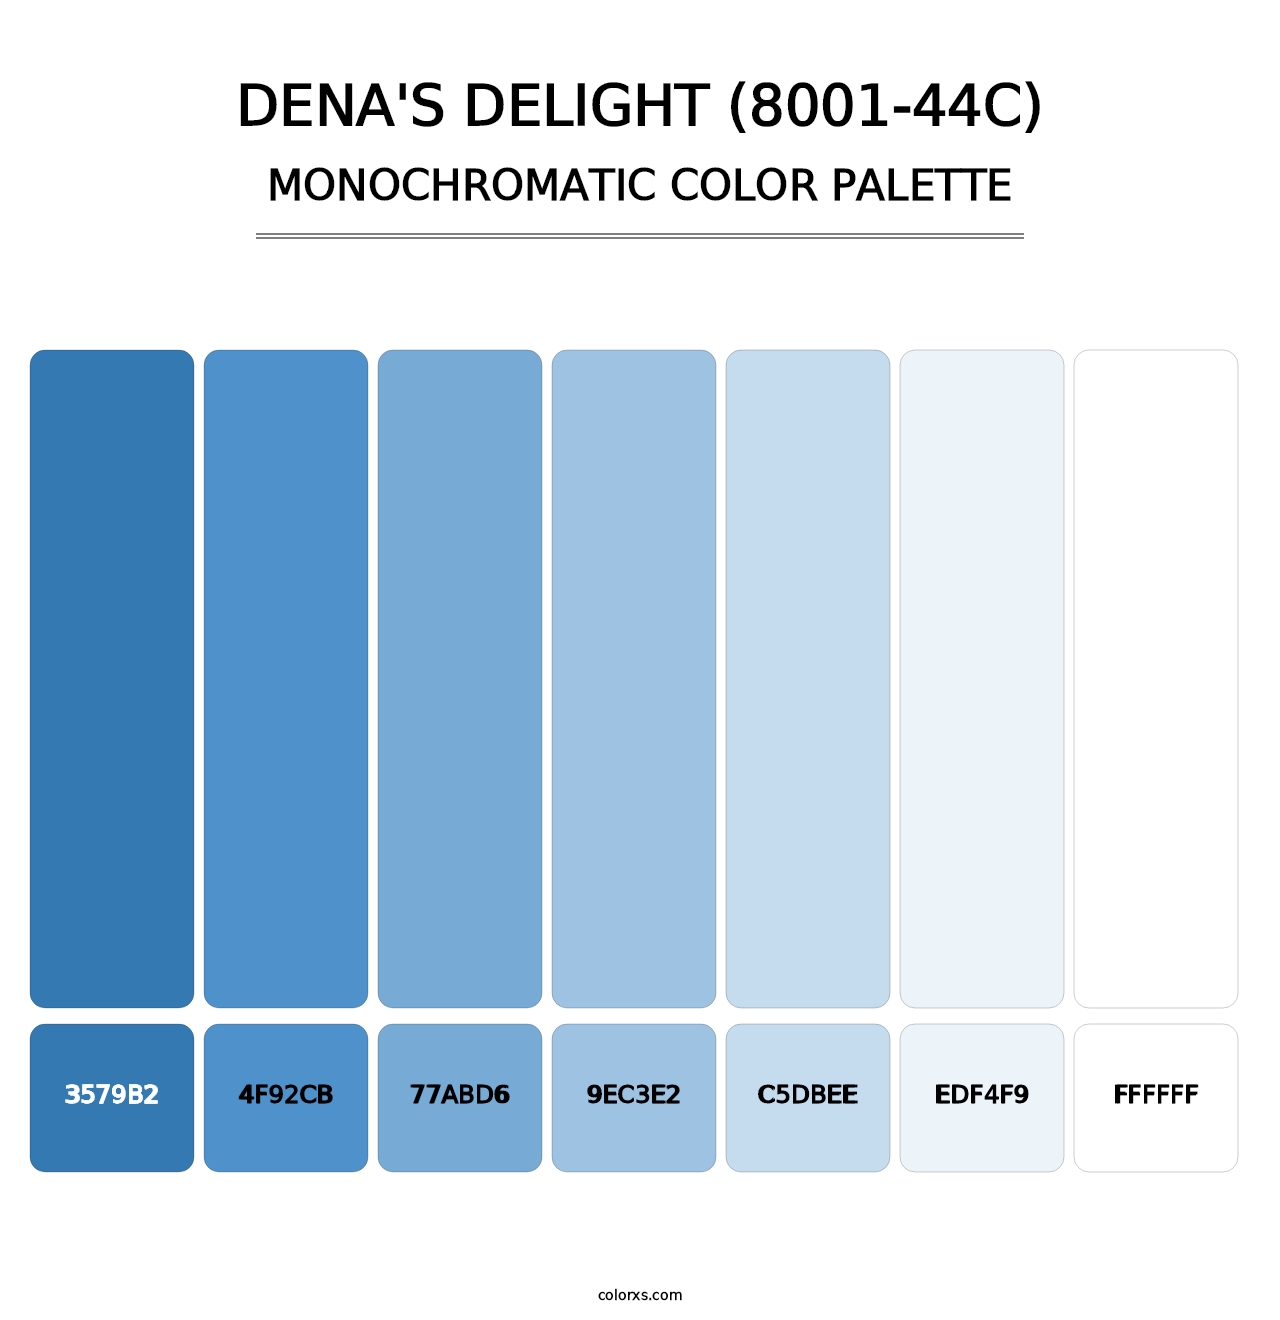 Dena's Delight (8001-44C) - Monochromatic Color Palette